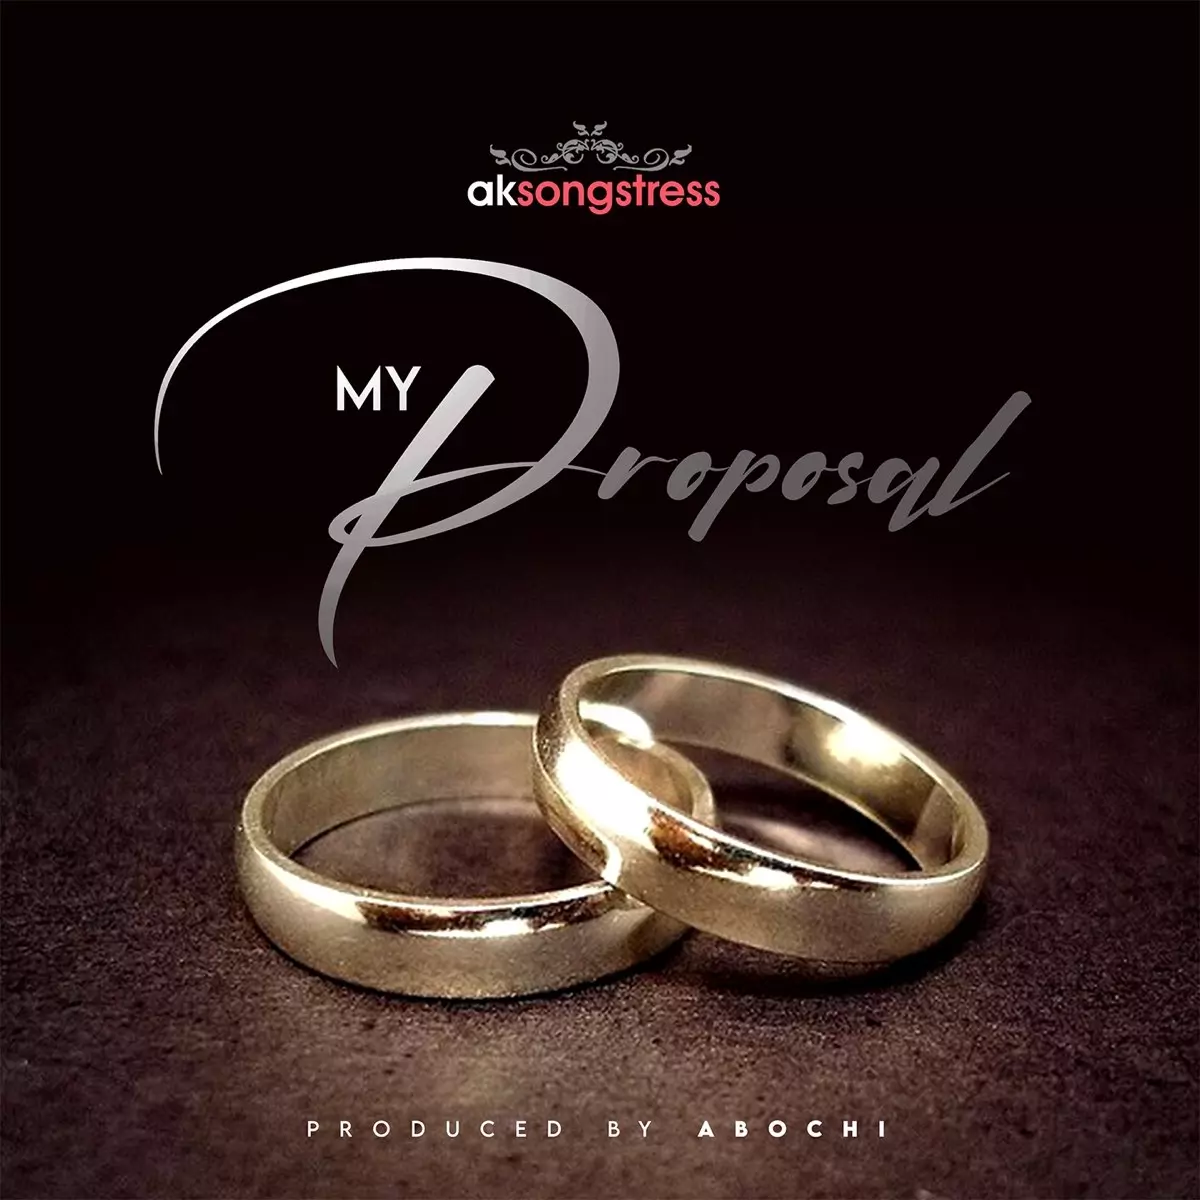 My Proposal - Single by Ak Songstress on Apple Music